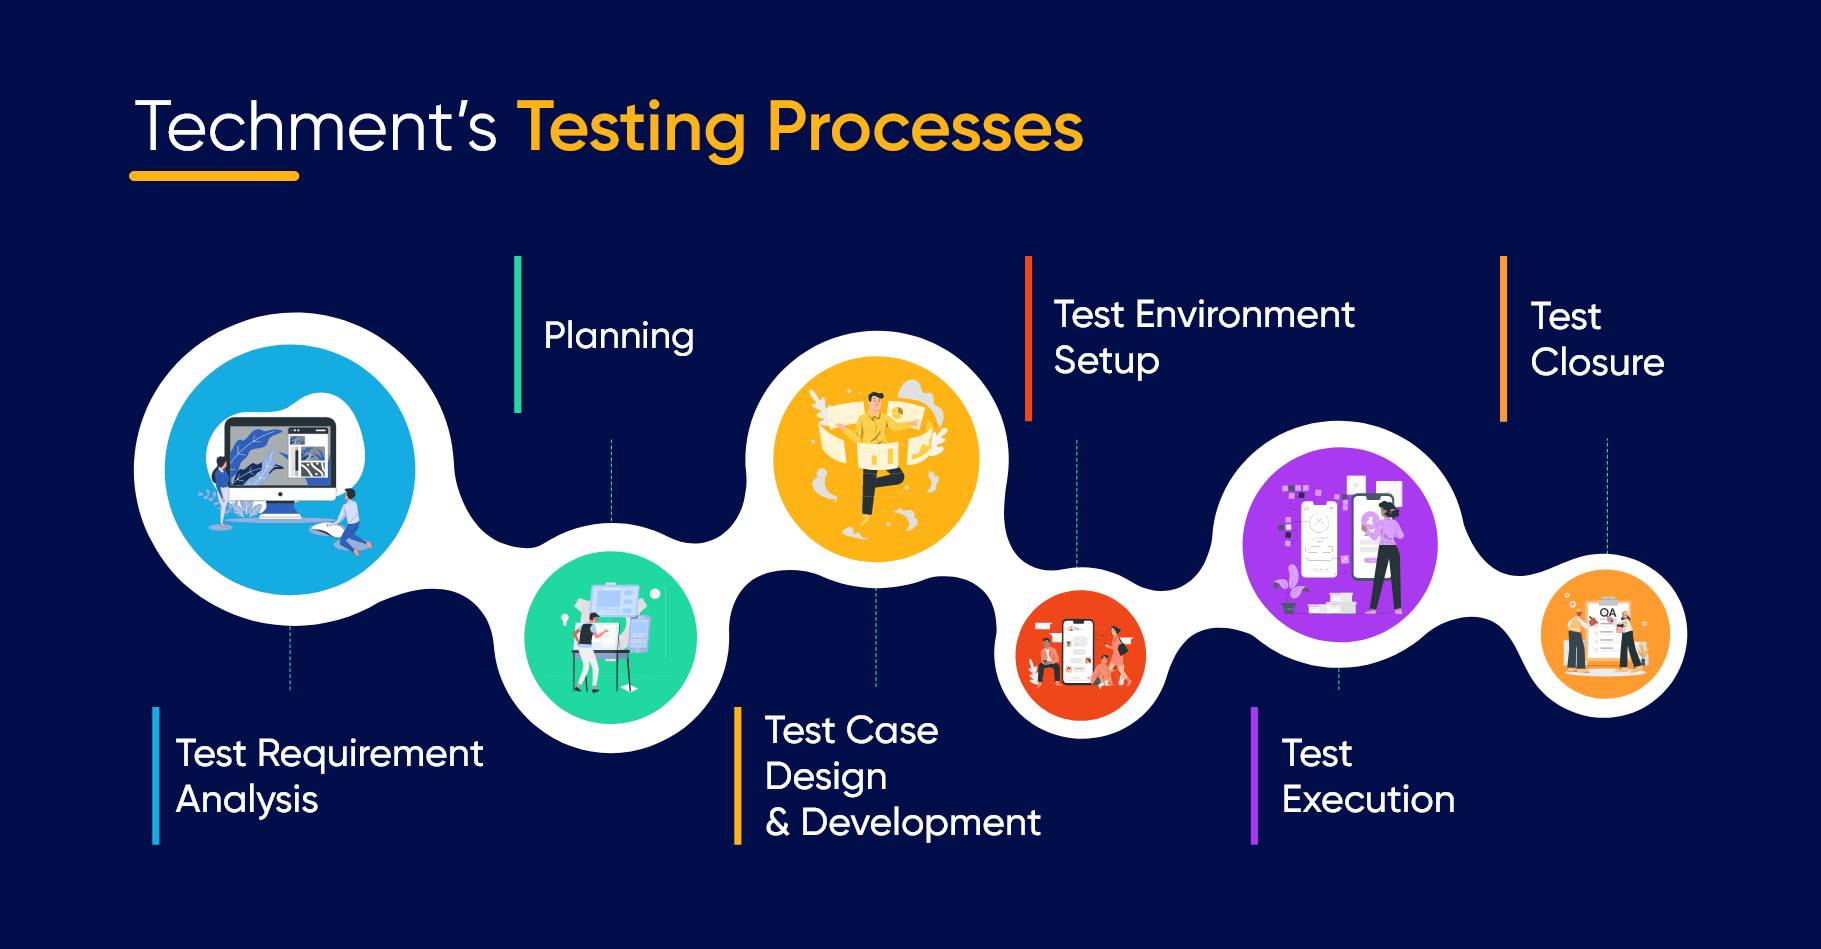  Techment’s testing processes